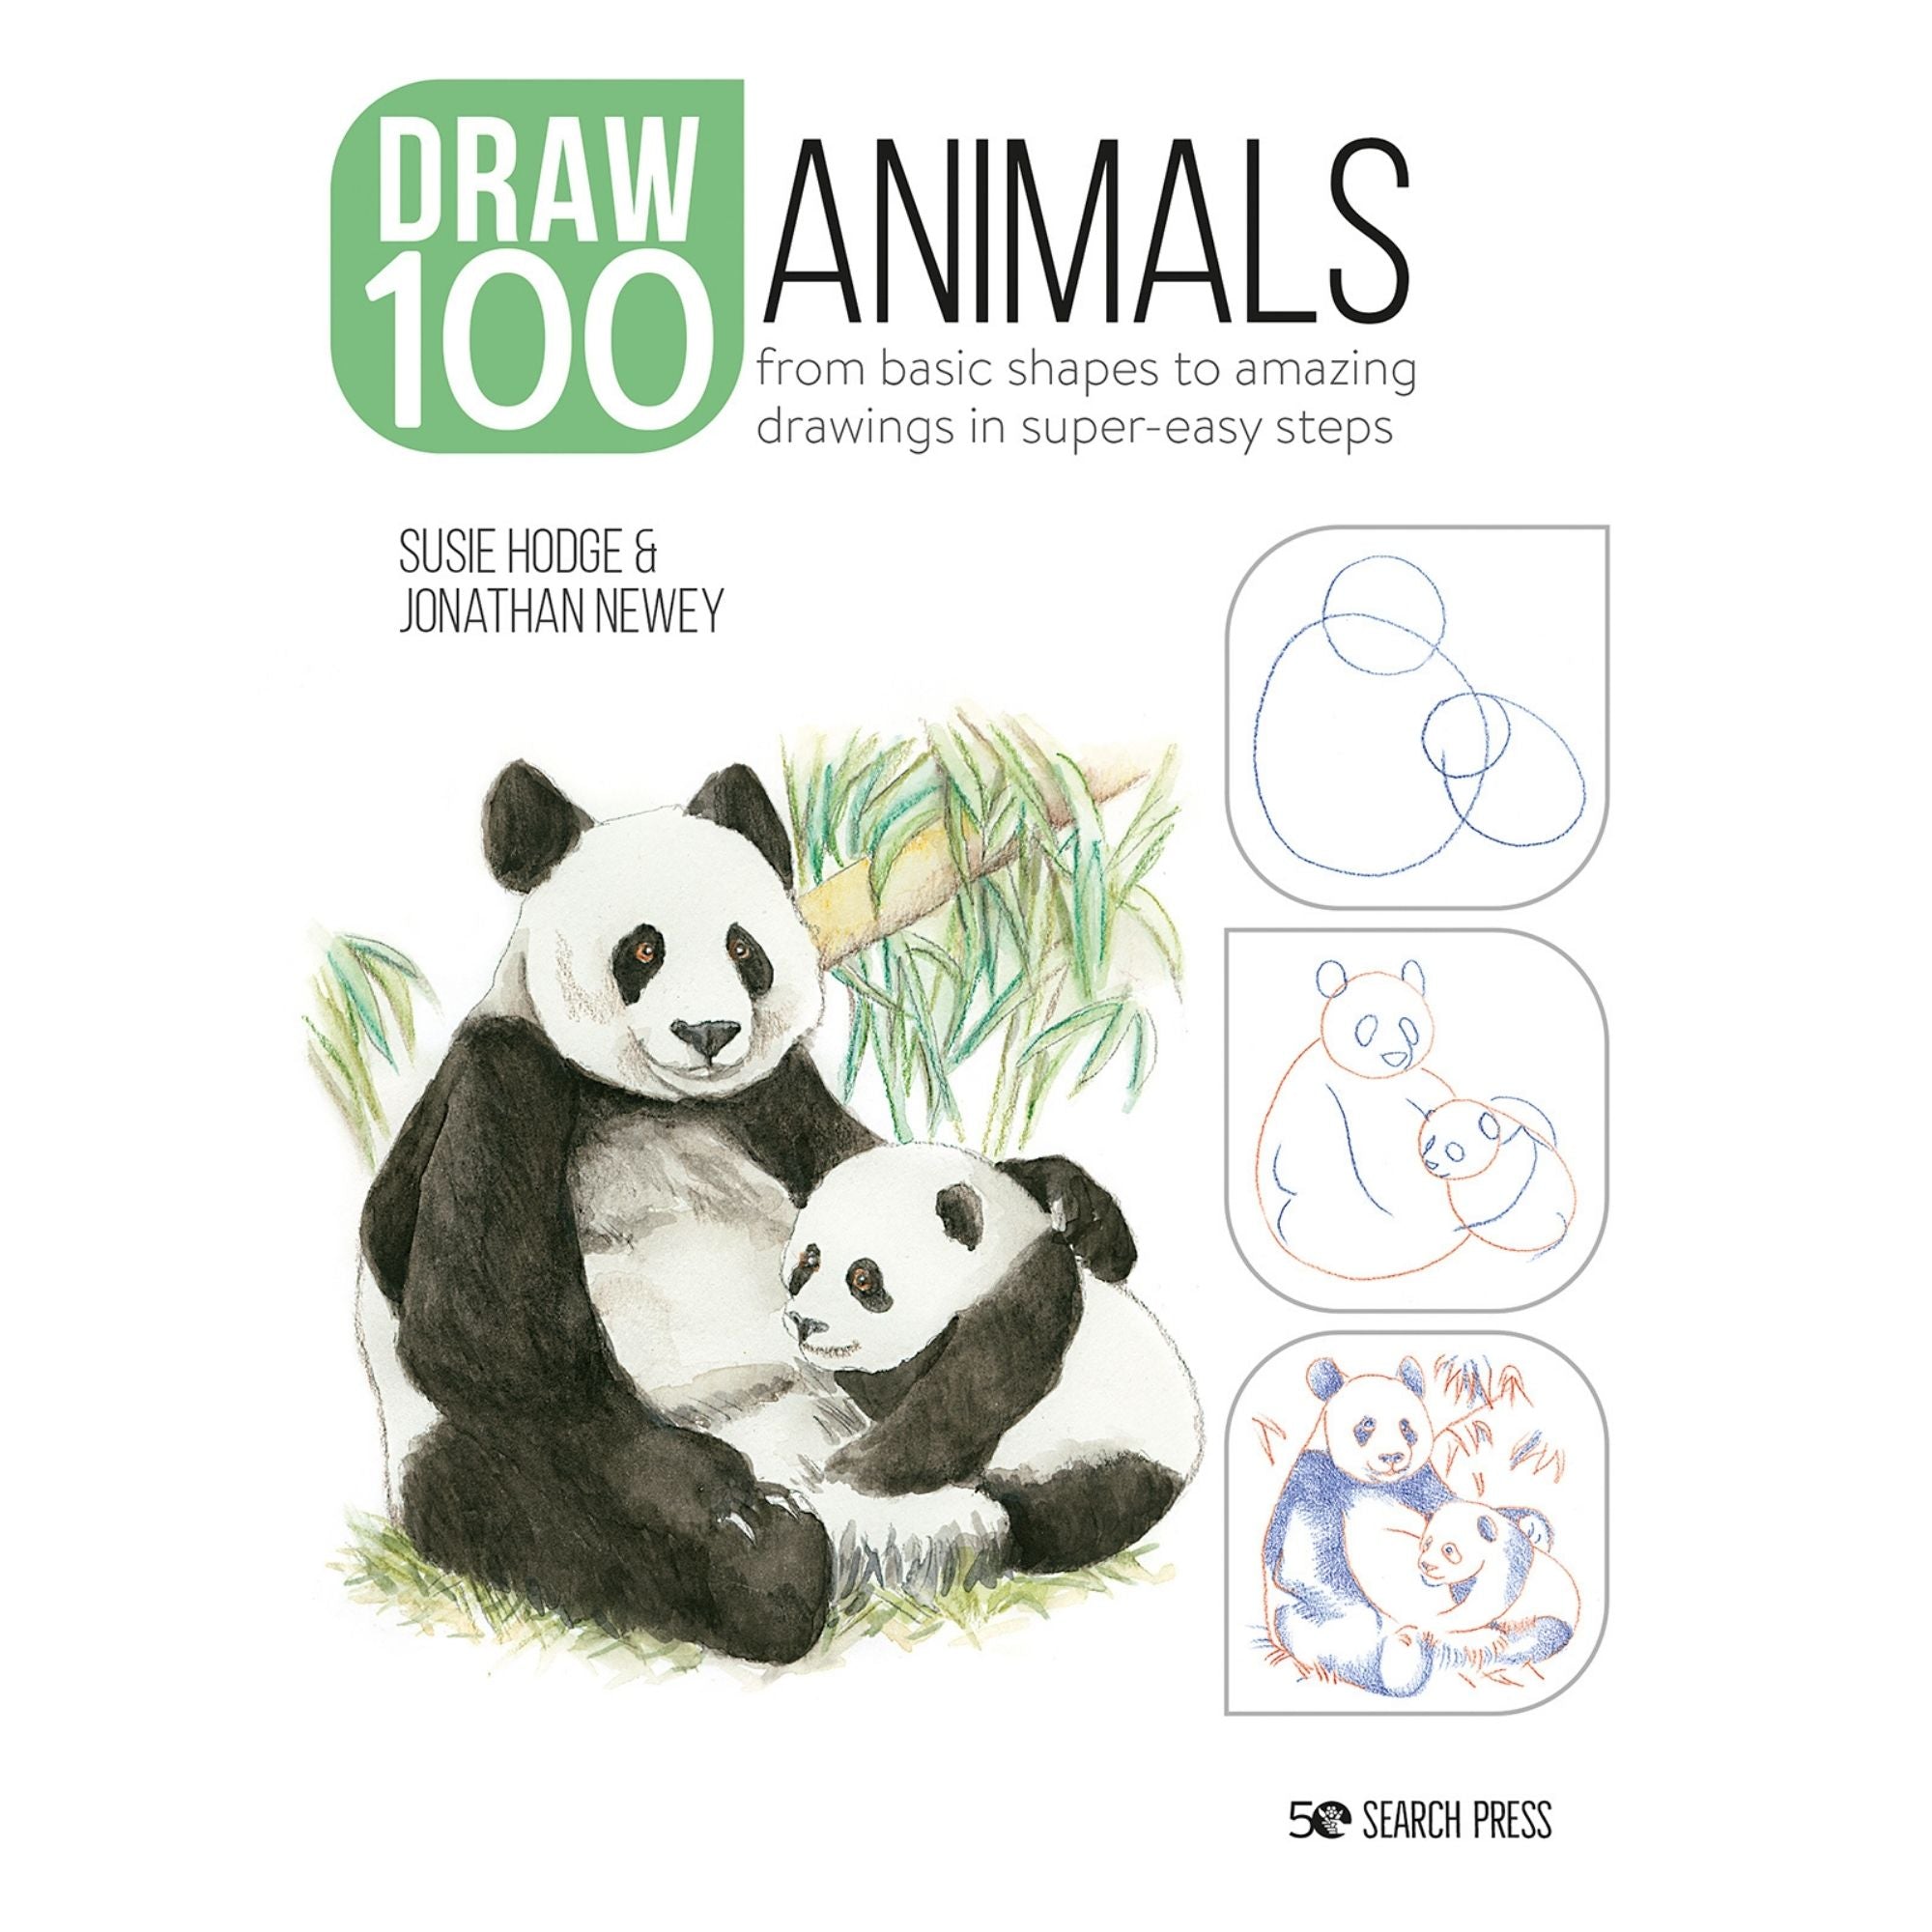 Draw 100 Animals - S. Hodge & J. Newey - Cover